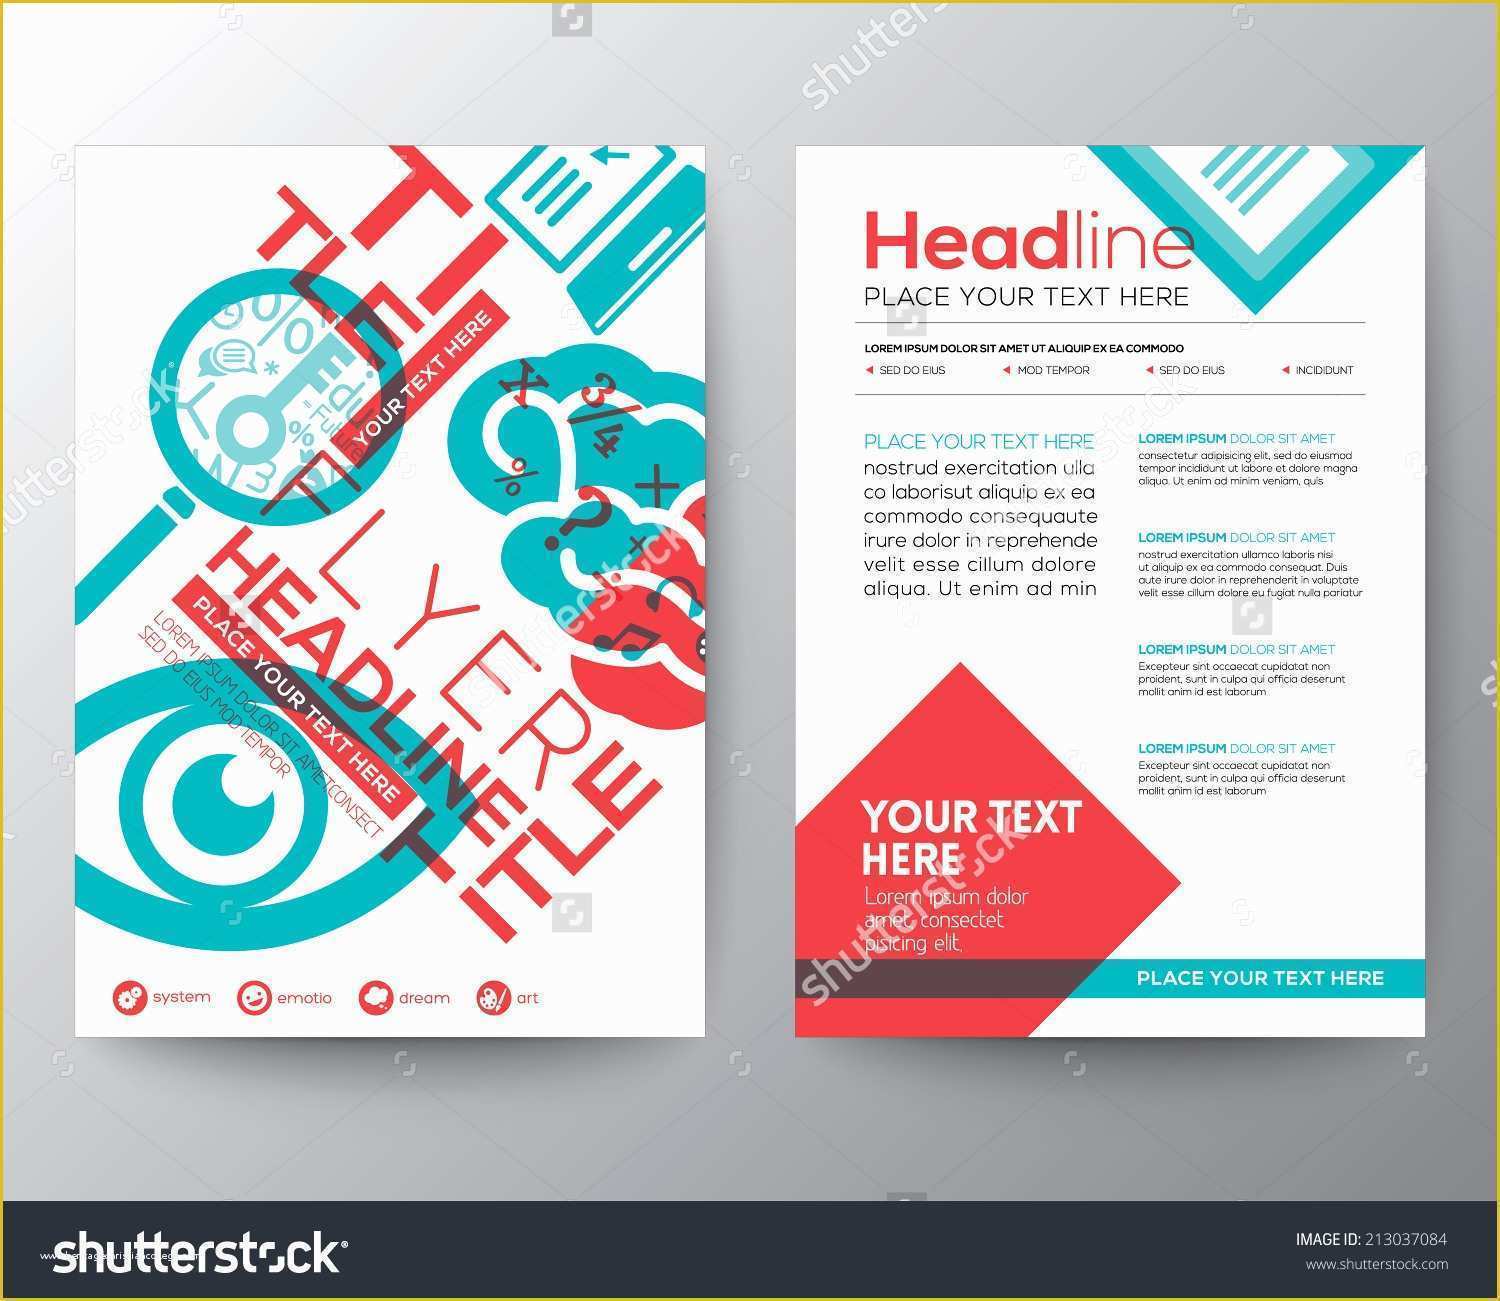 Free E Brochure Design Templates Of Free Google Flyer Design Yourweek D1b3dceca25e